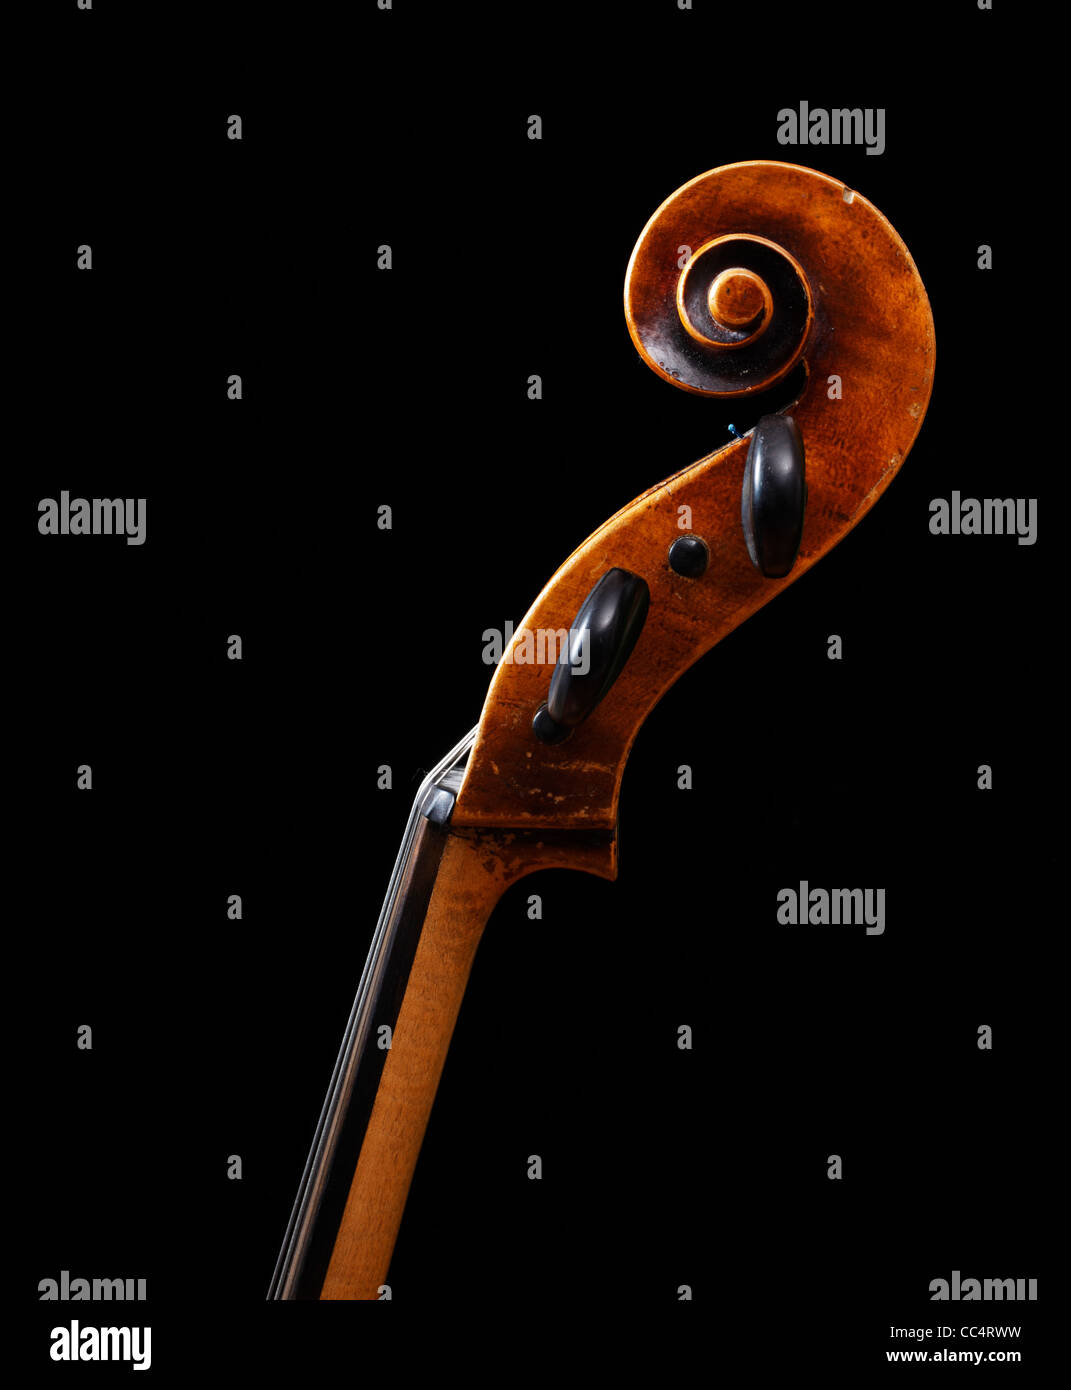 Head of Cello Stock Photo